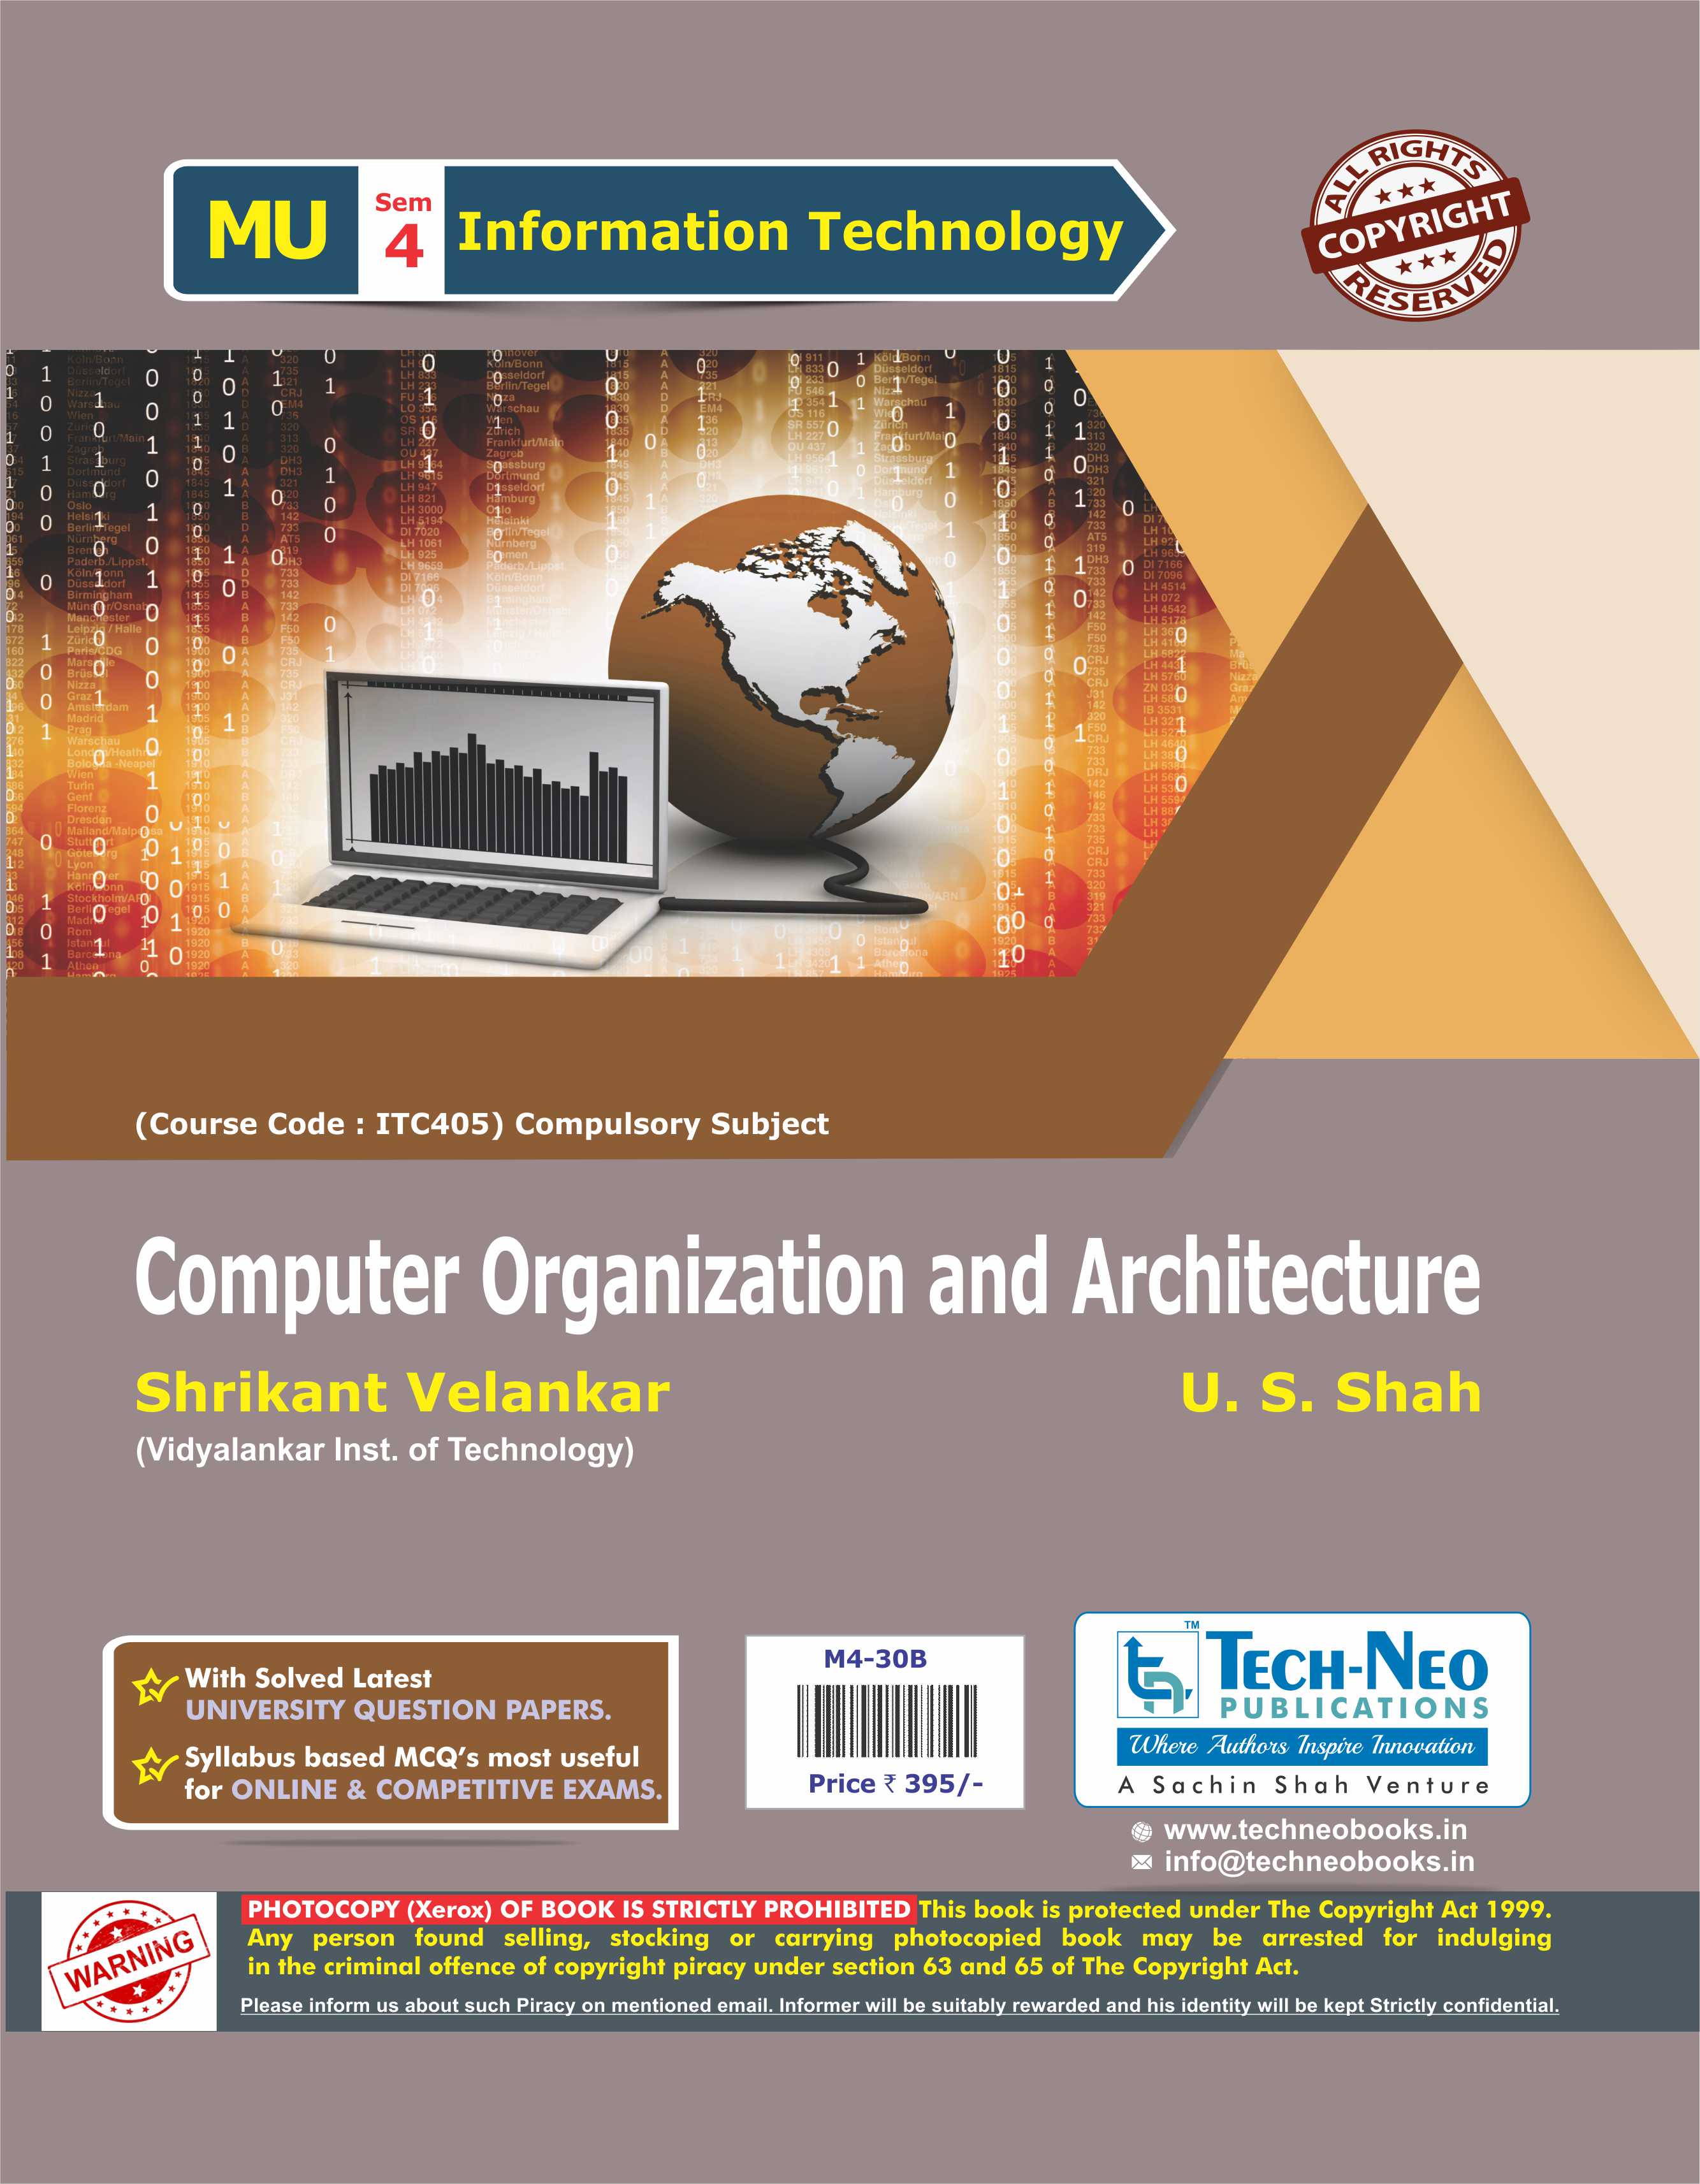 Computer Organization and Architecture (ITC405)